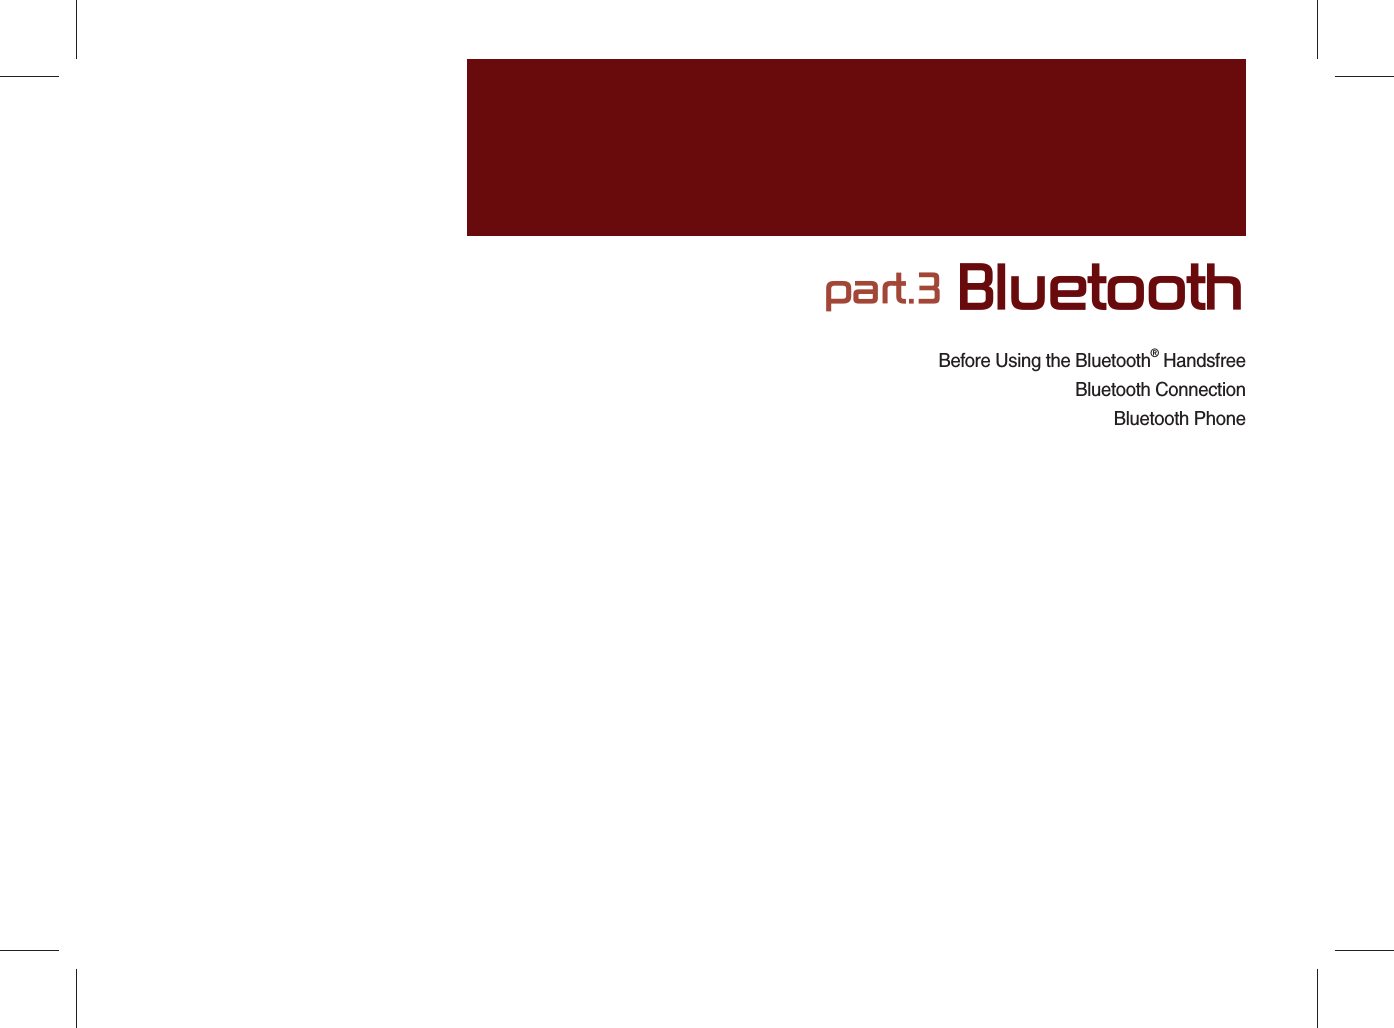 Before Using the Bluetooth® HandsfreeBluetooth ConnectionBluetooth Phonepart.3 Bluetooth